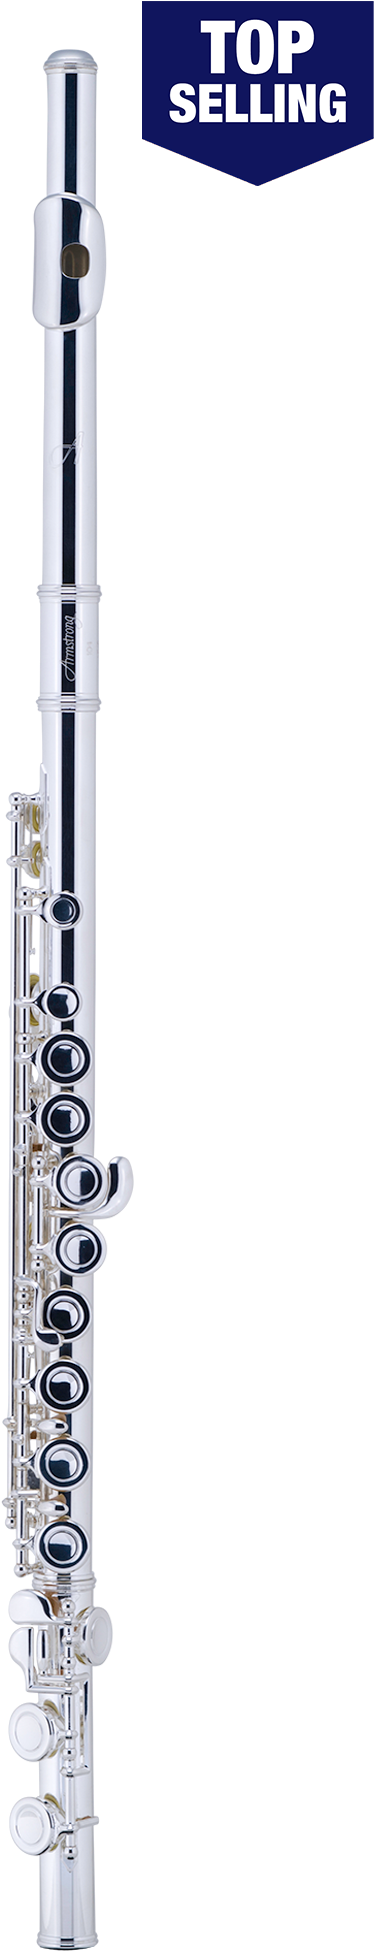 Flute Png 374 X 1951